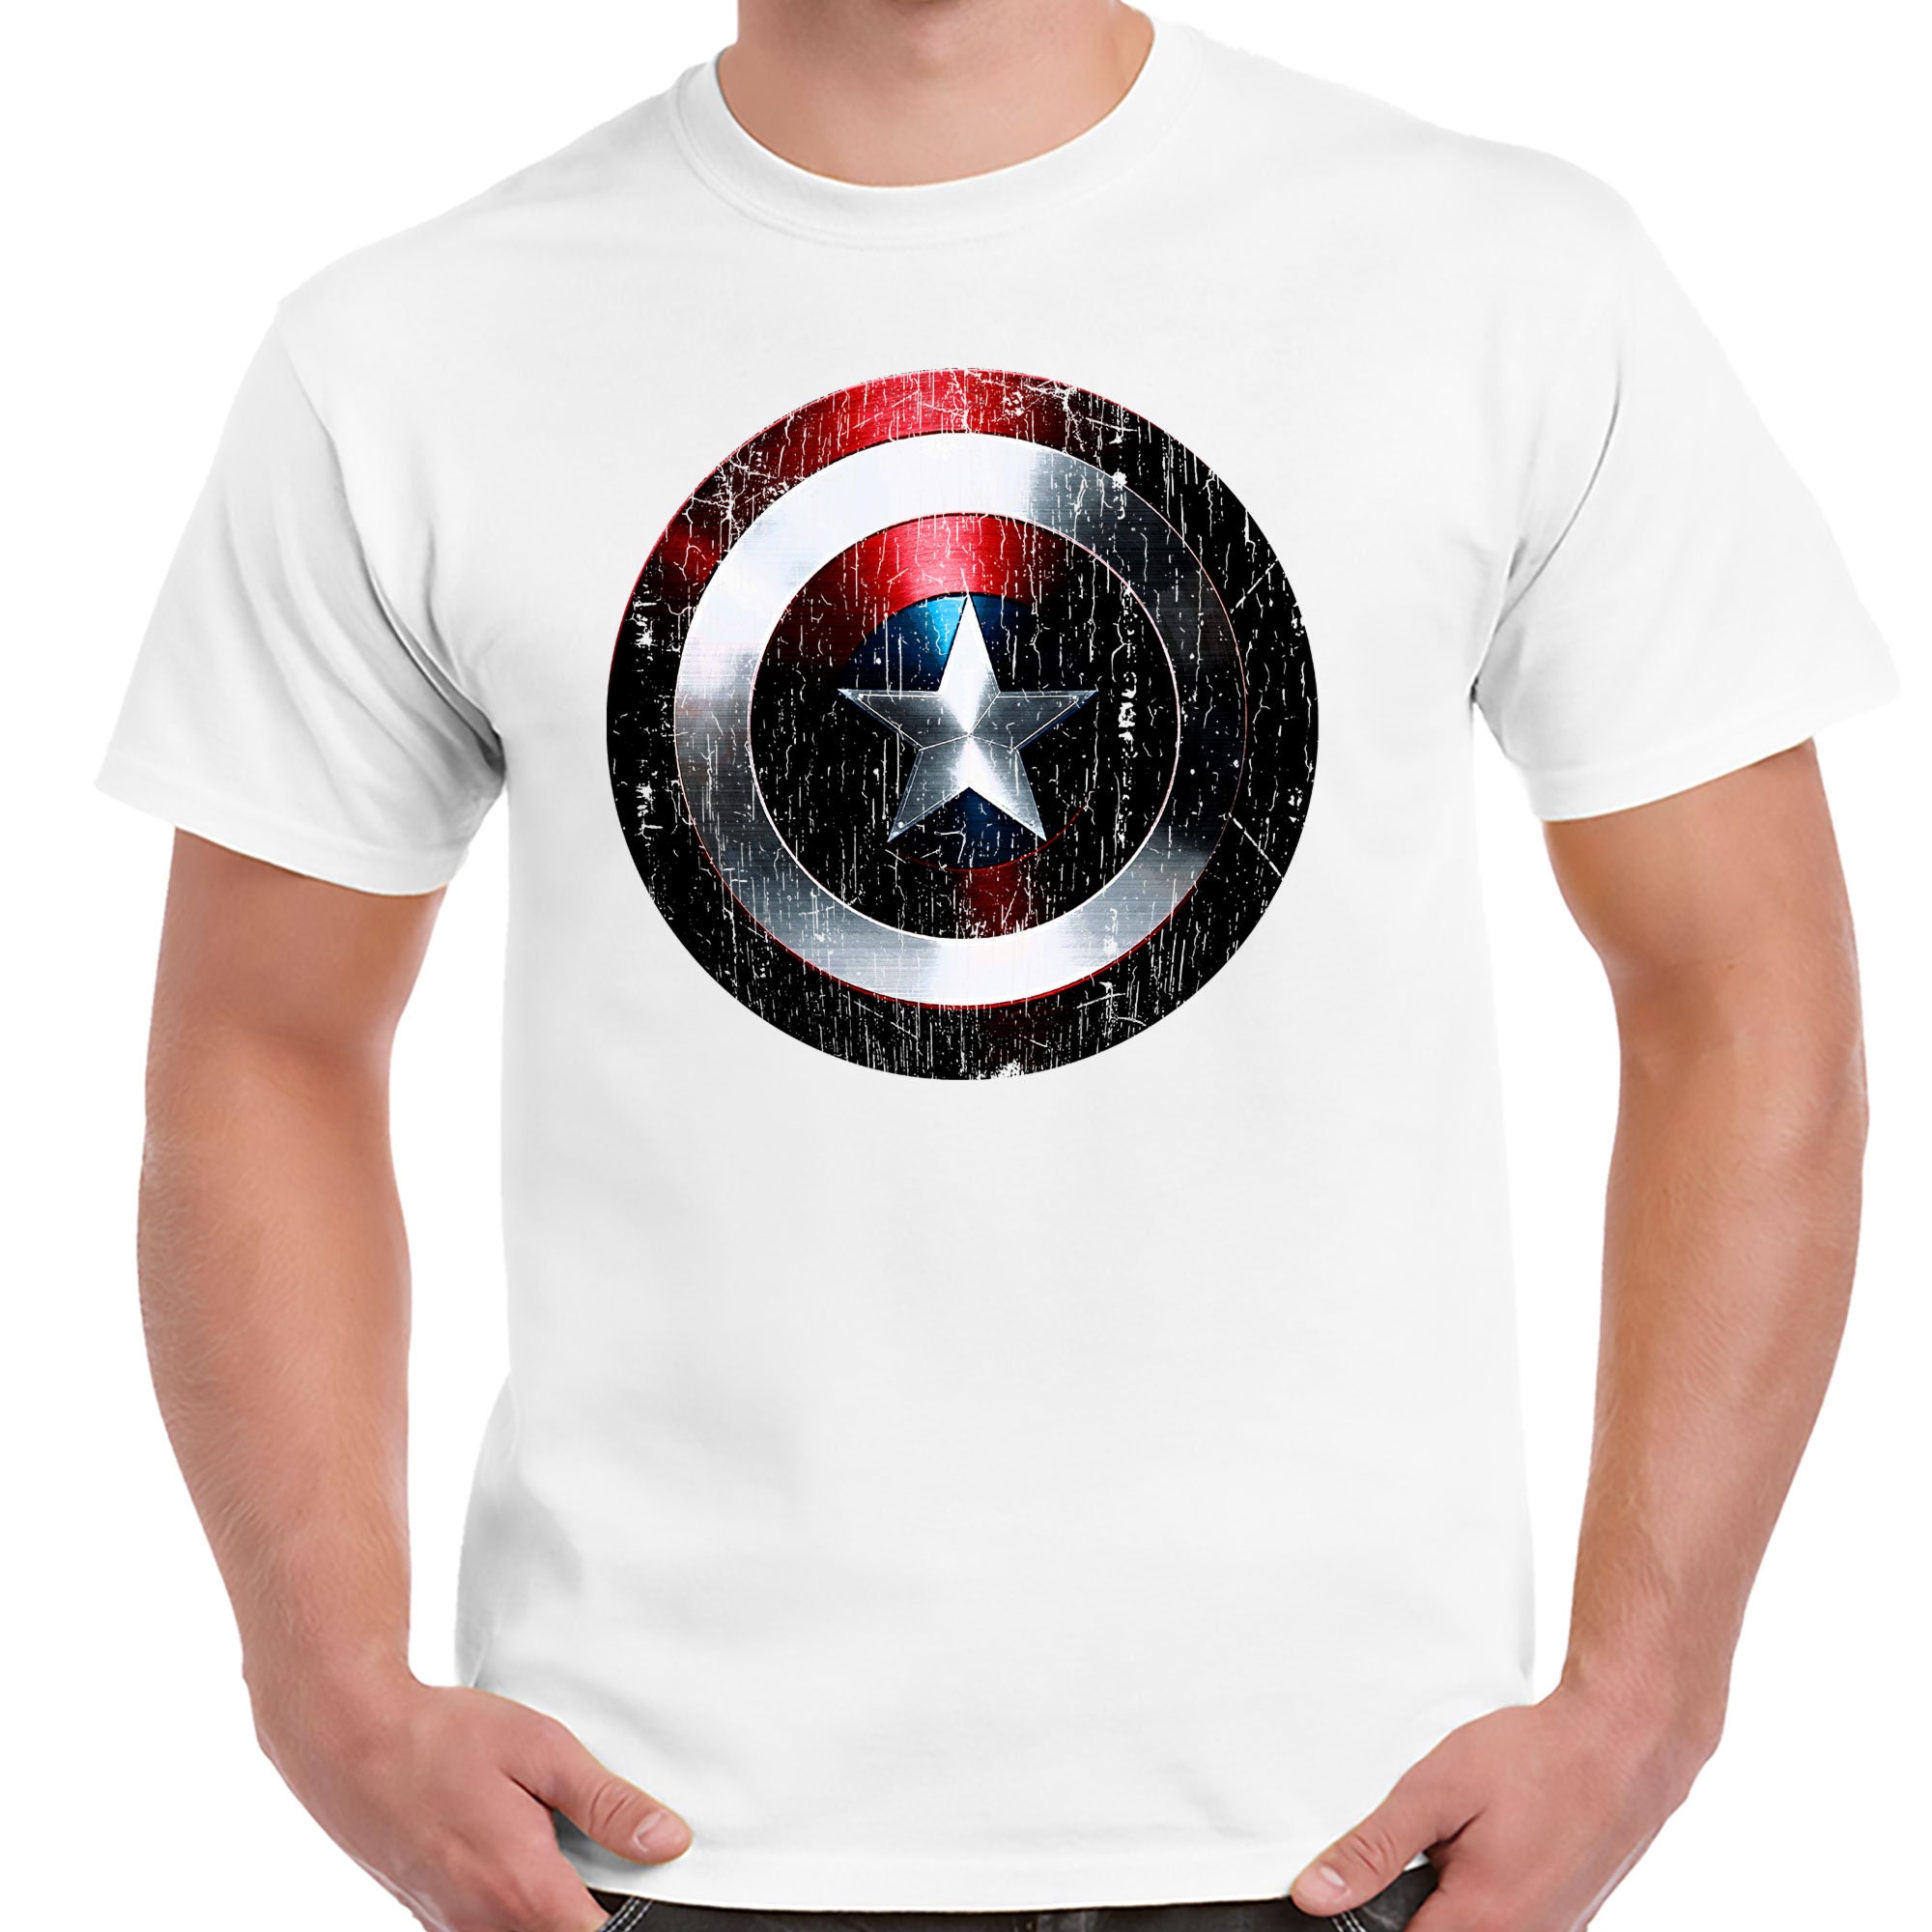 T shield. Футболка Капитан Америка. Captain футболка со значками. Captain adidas футболка со значками. American Tshirt Design.